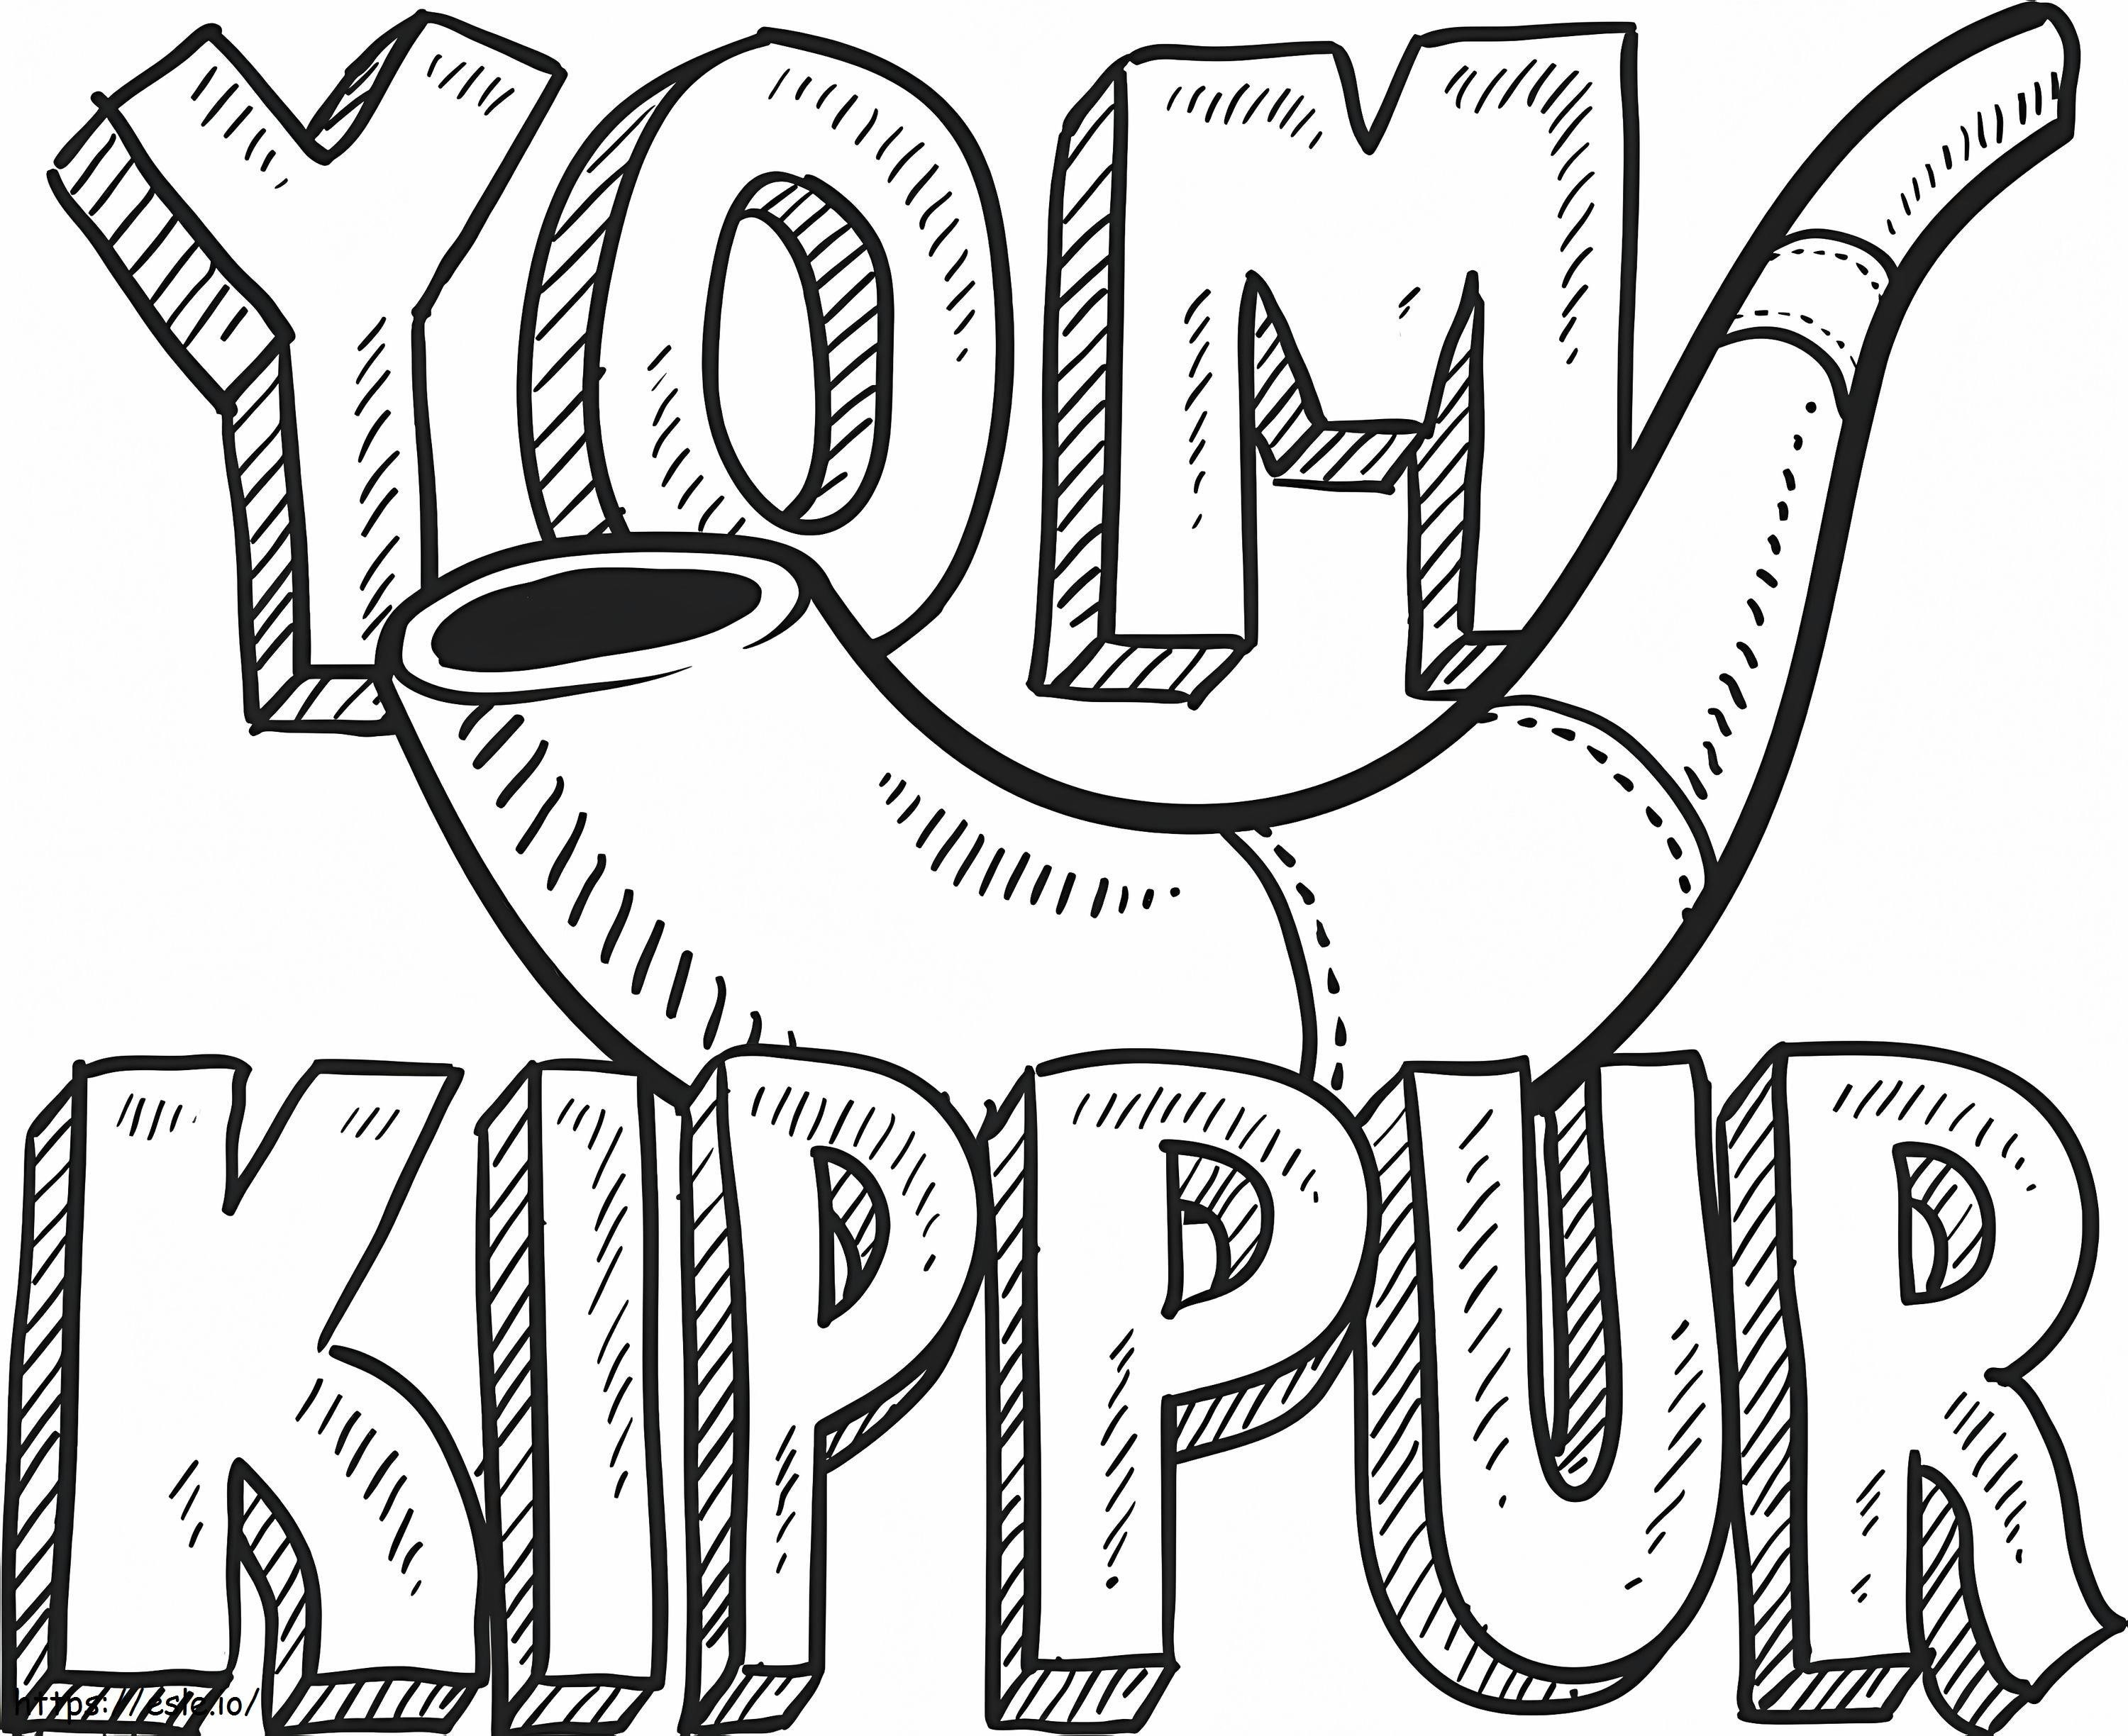 Jom Kippur kifestő